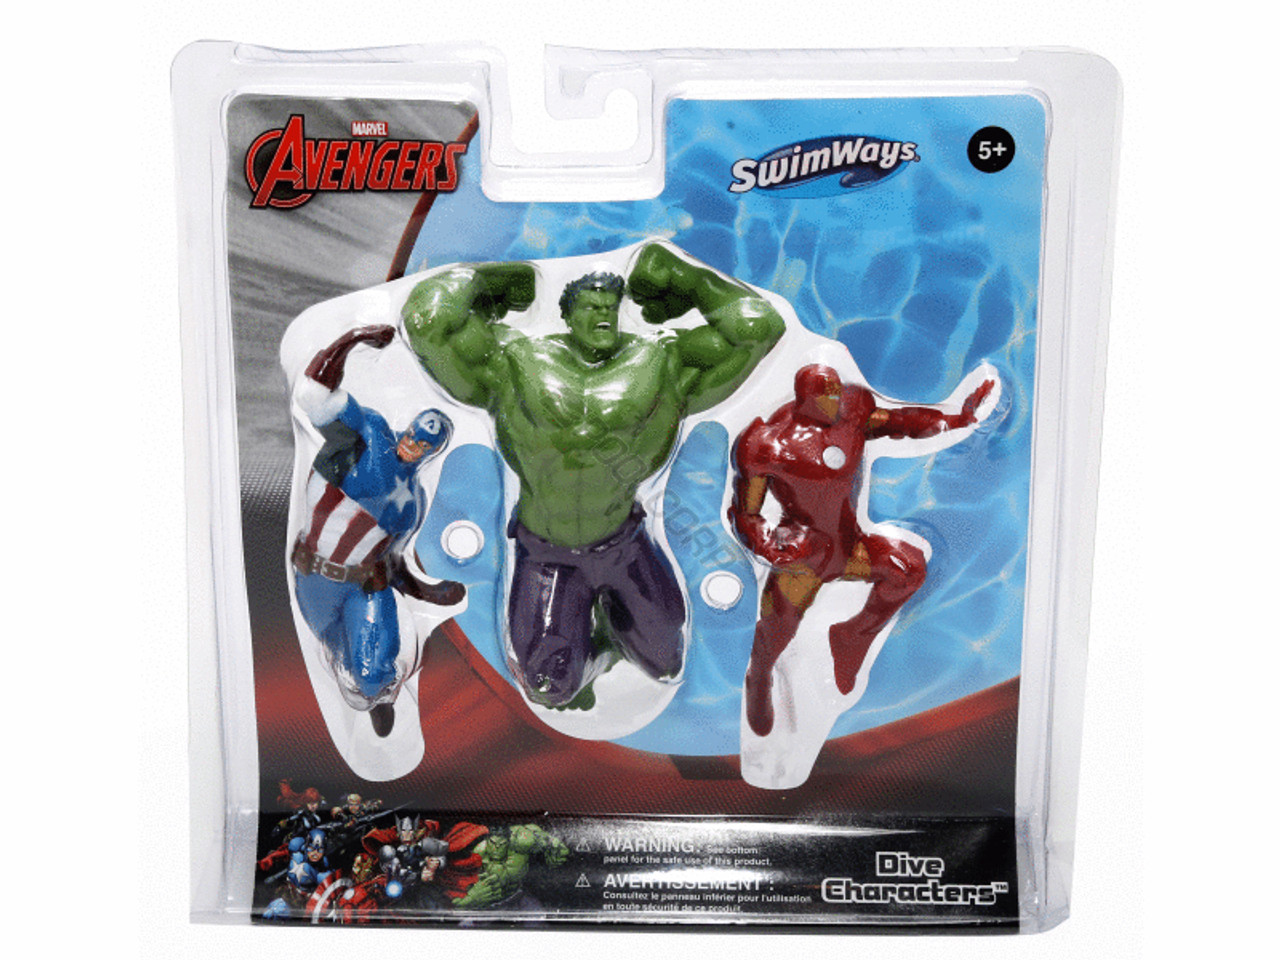 Marvels "Avengers Assemble" Diving Pool Toys